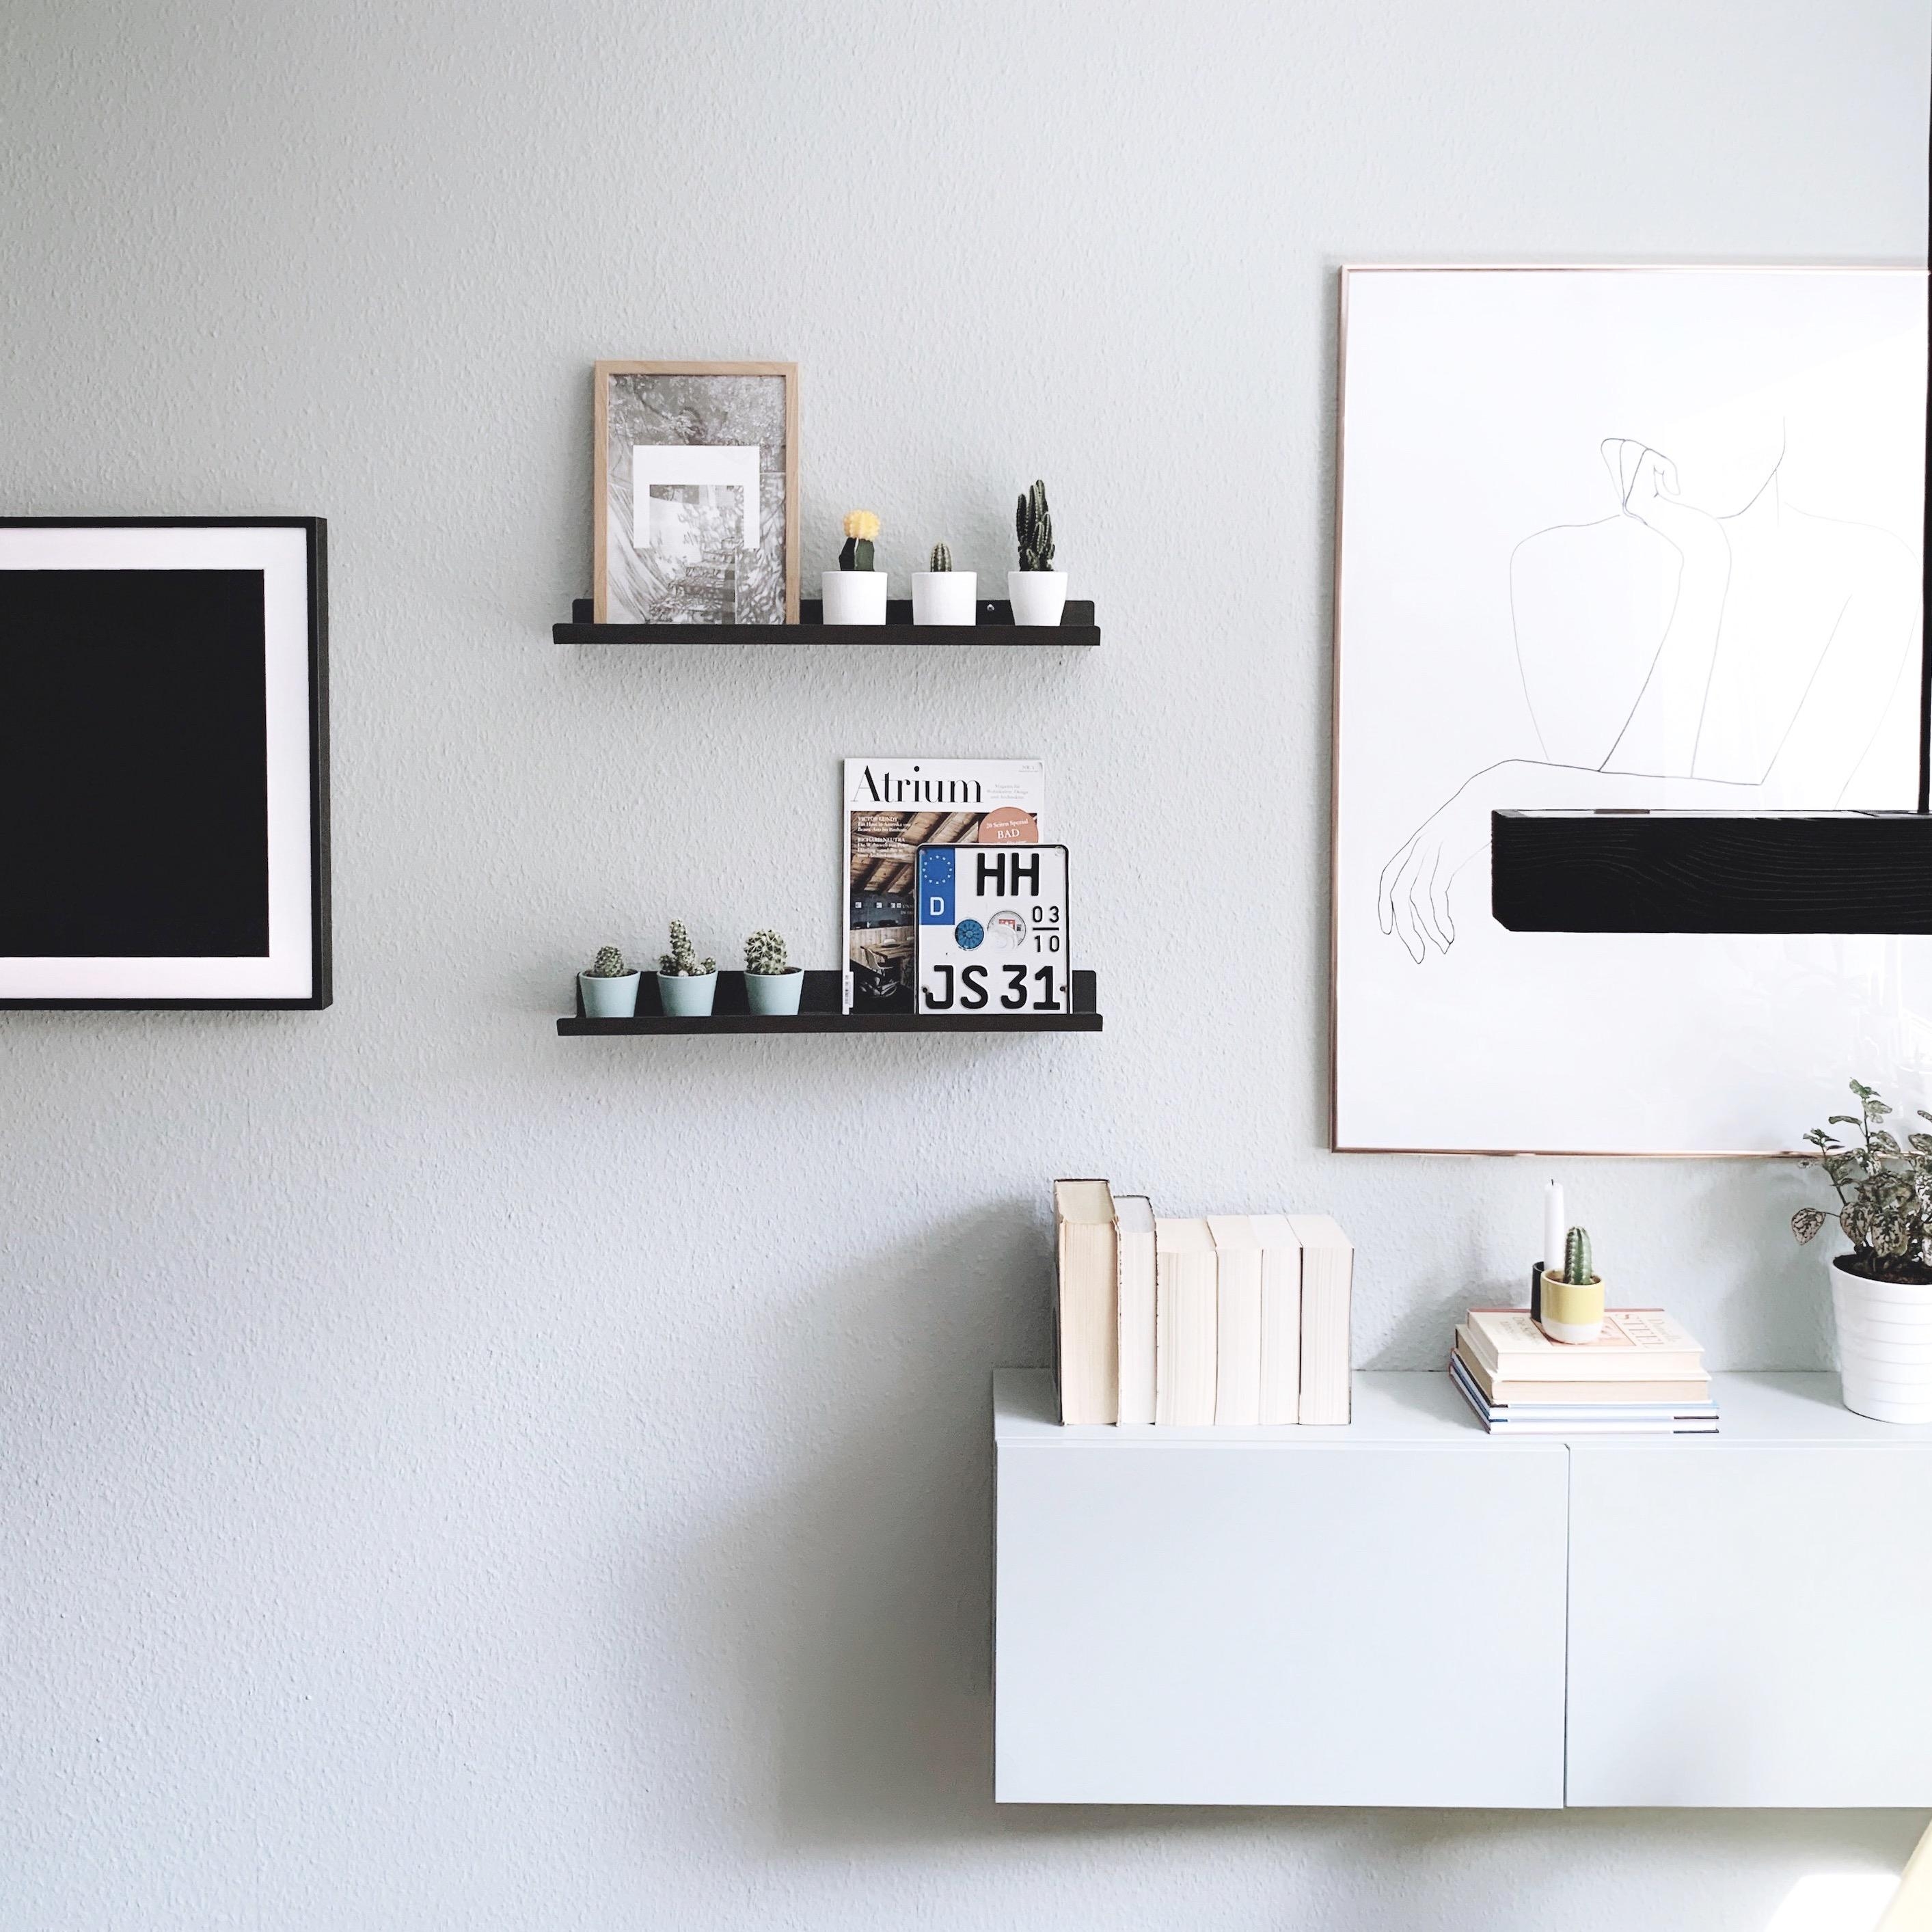 #minimalism #interior #interiorinspo #mynordicroom #scandinaviandesign #scandinavianliving #kaktuslover